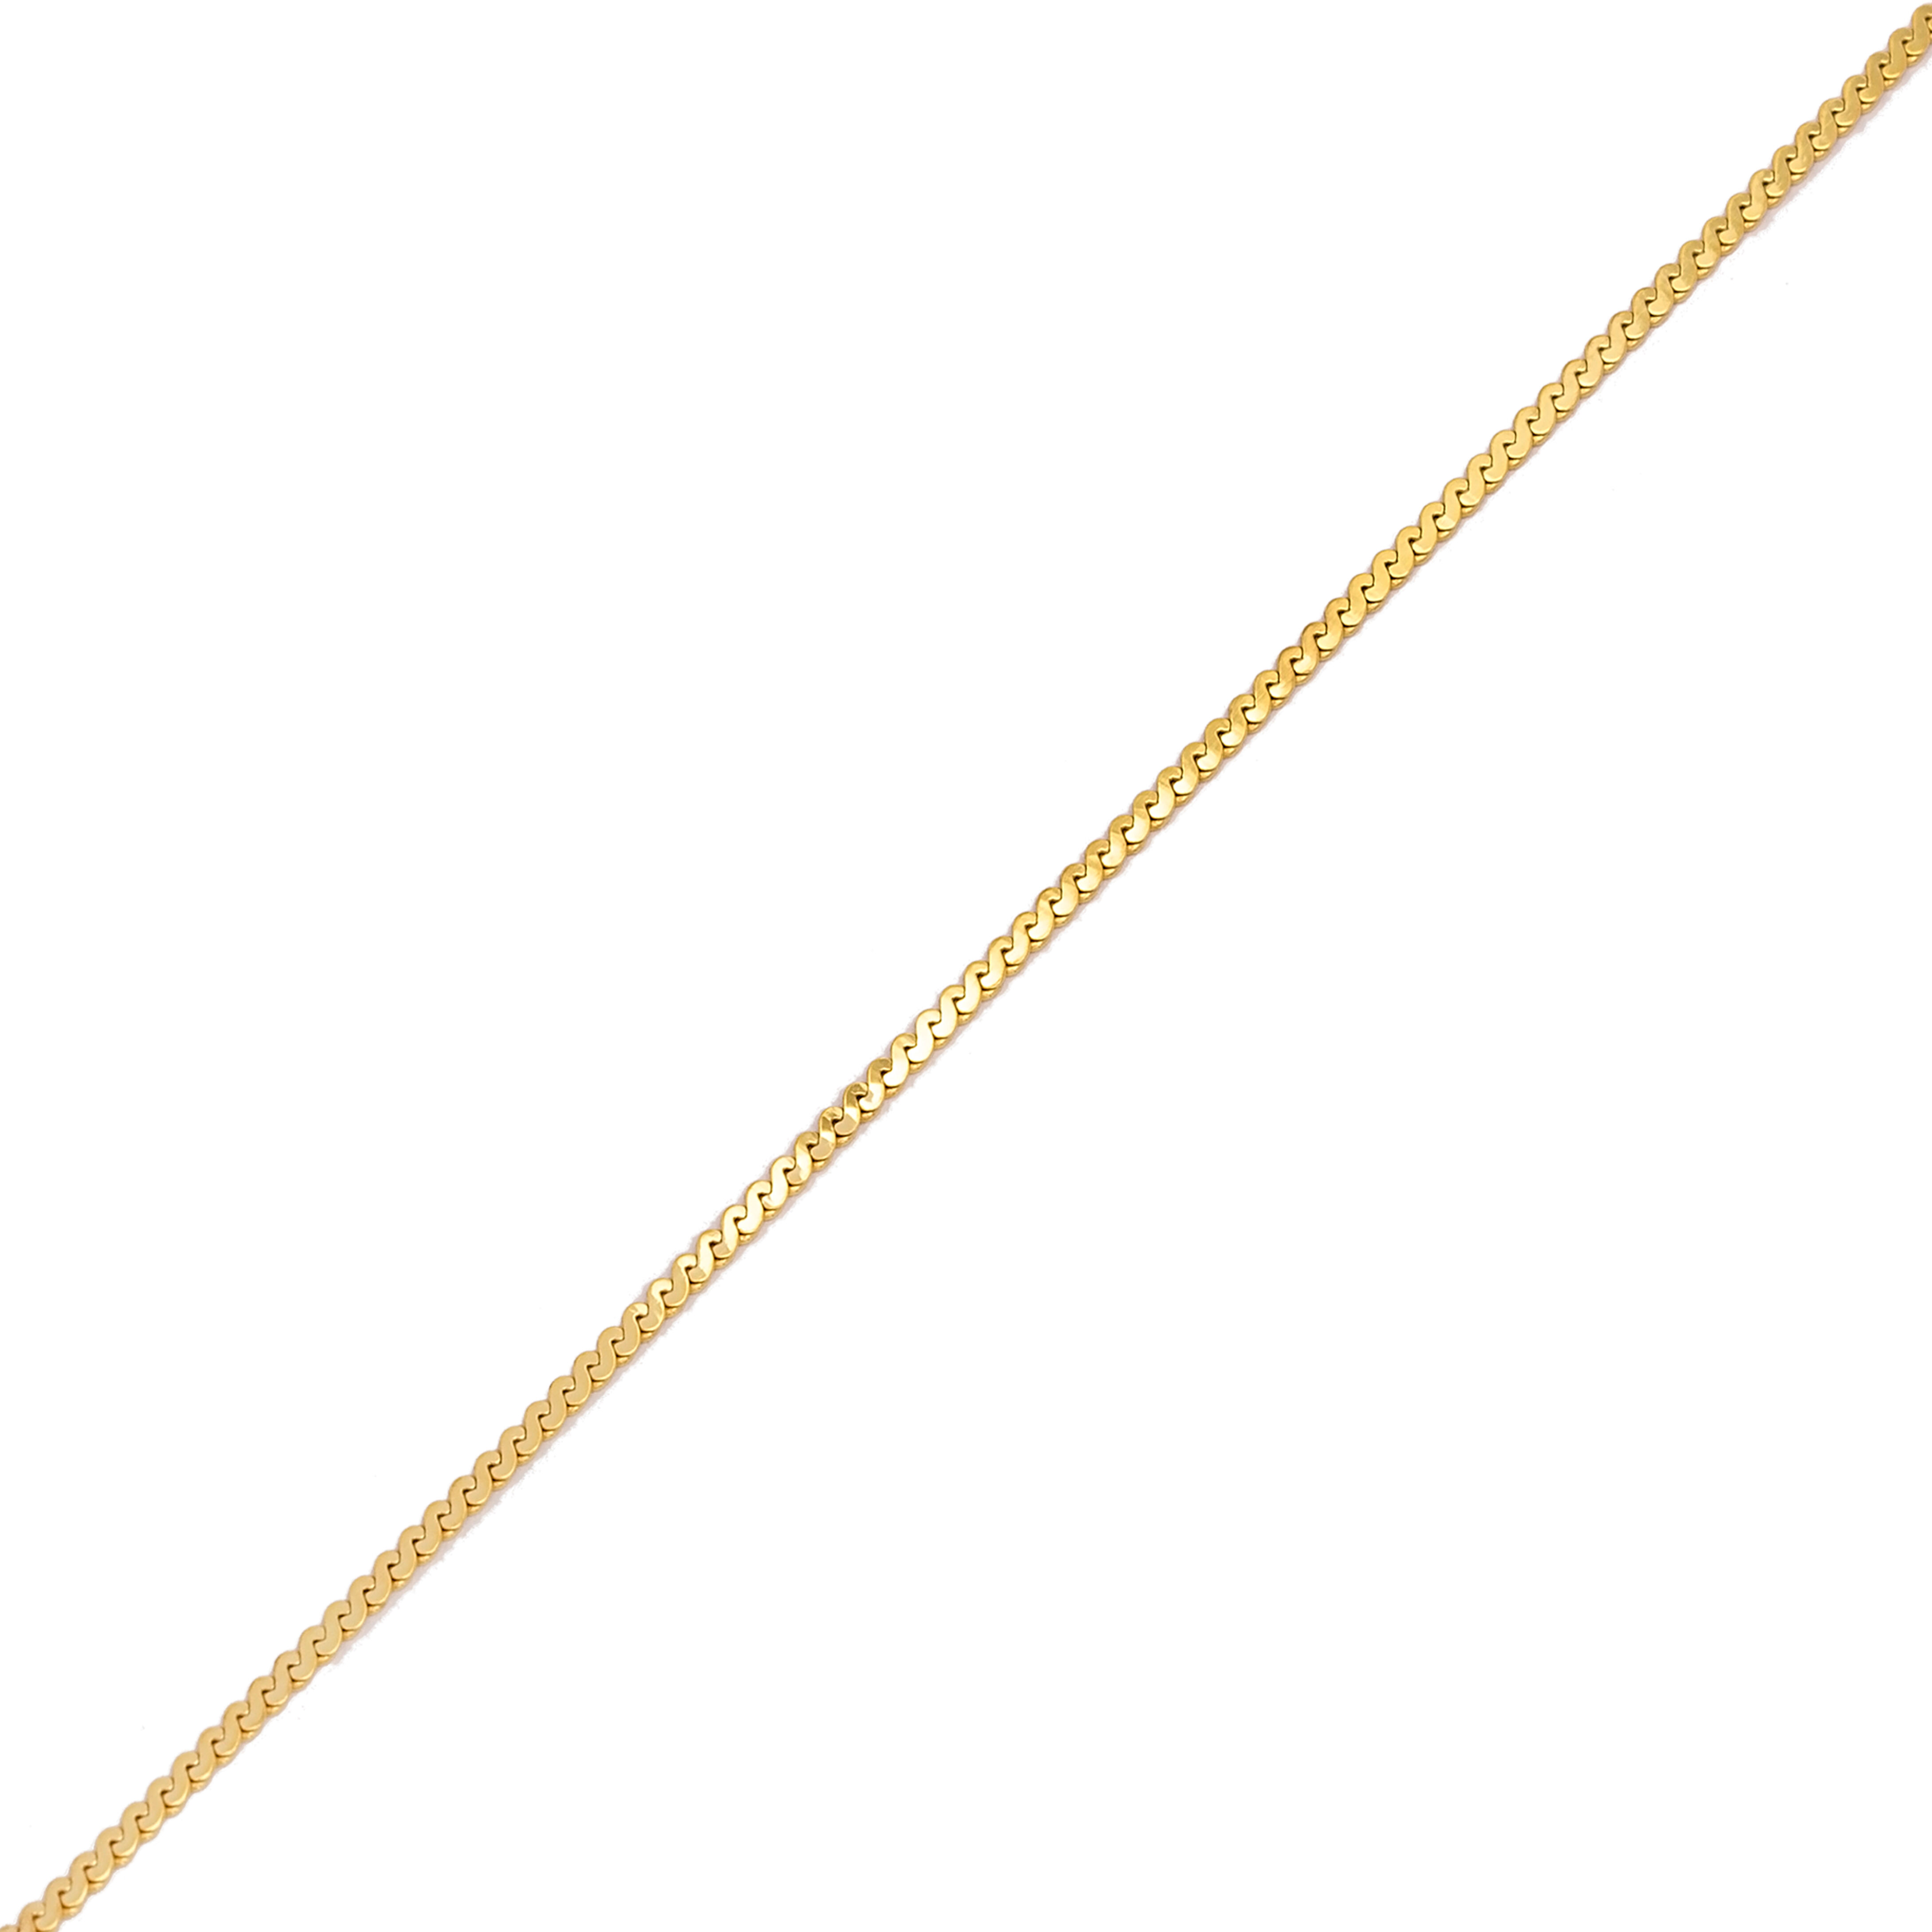 Thin Serpentine Chain 1.6 mm Bracelet Elegant Wholesale 925 Sterling Silver Jewelry